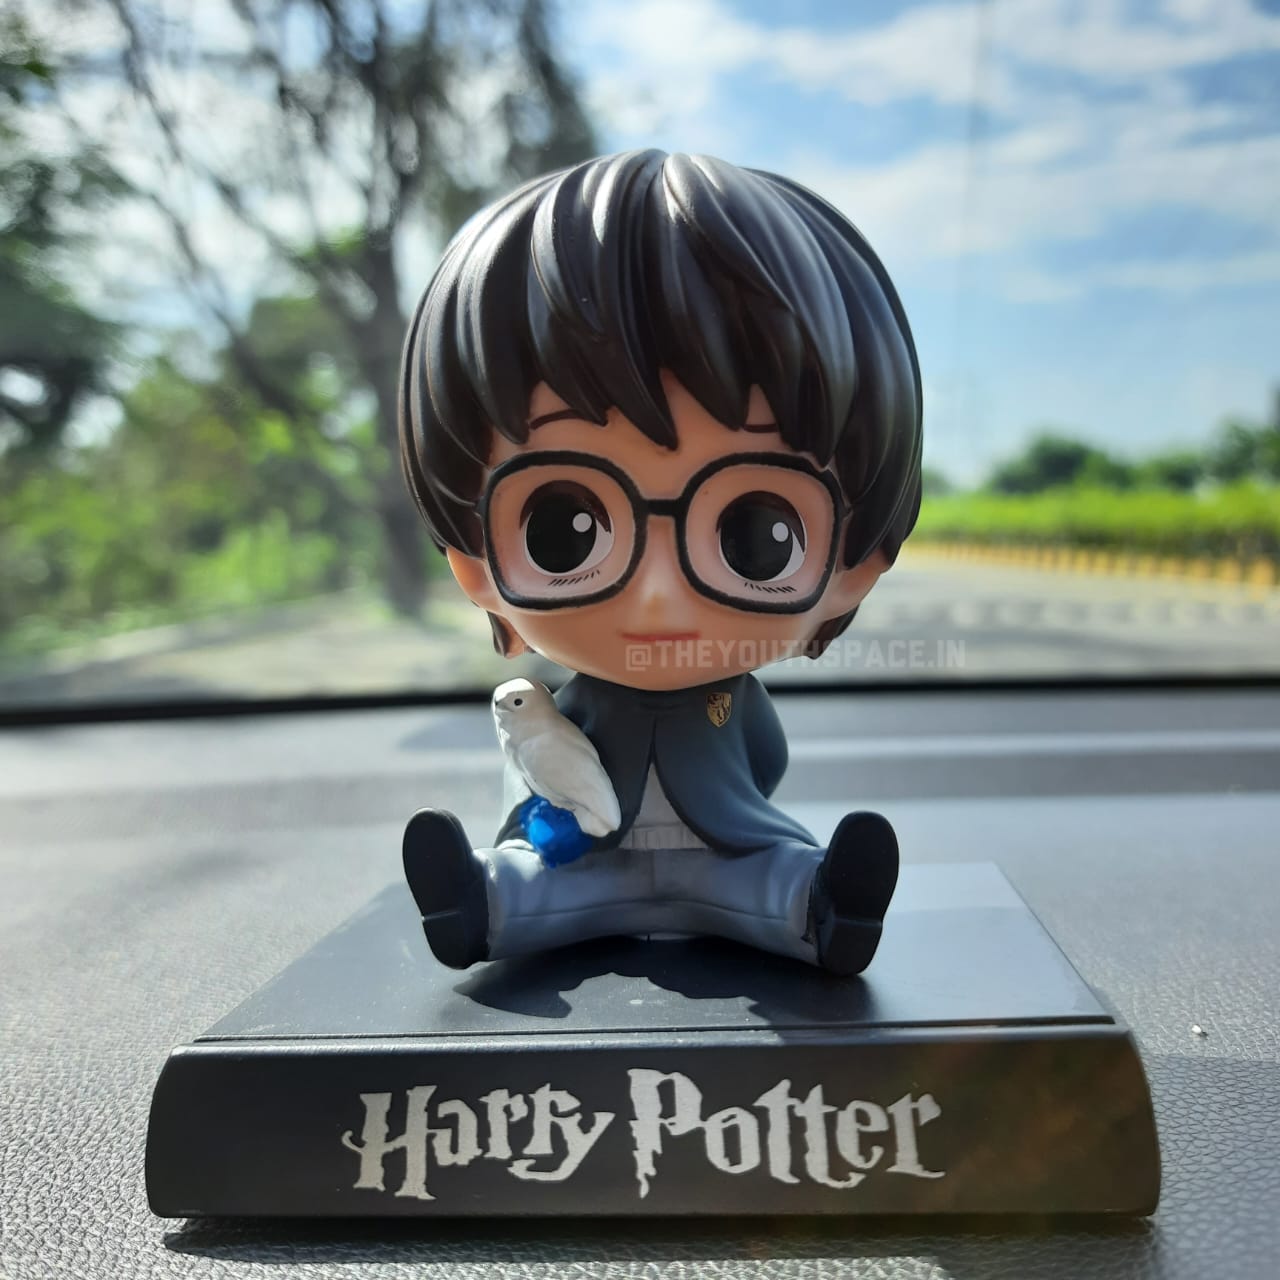 Harry Potter bobblehead